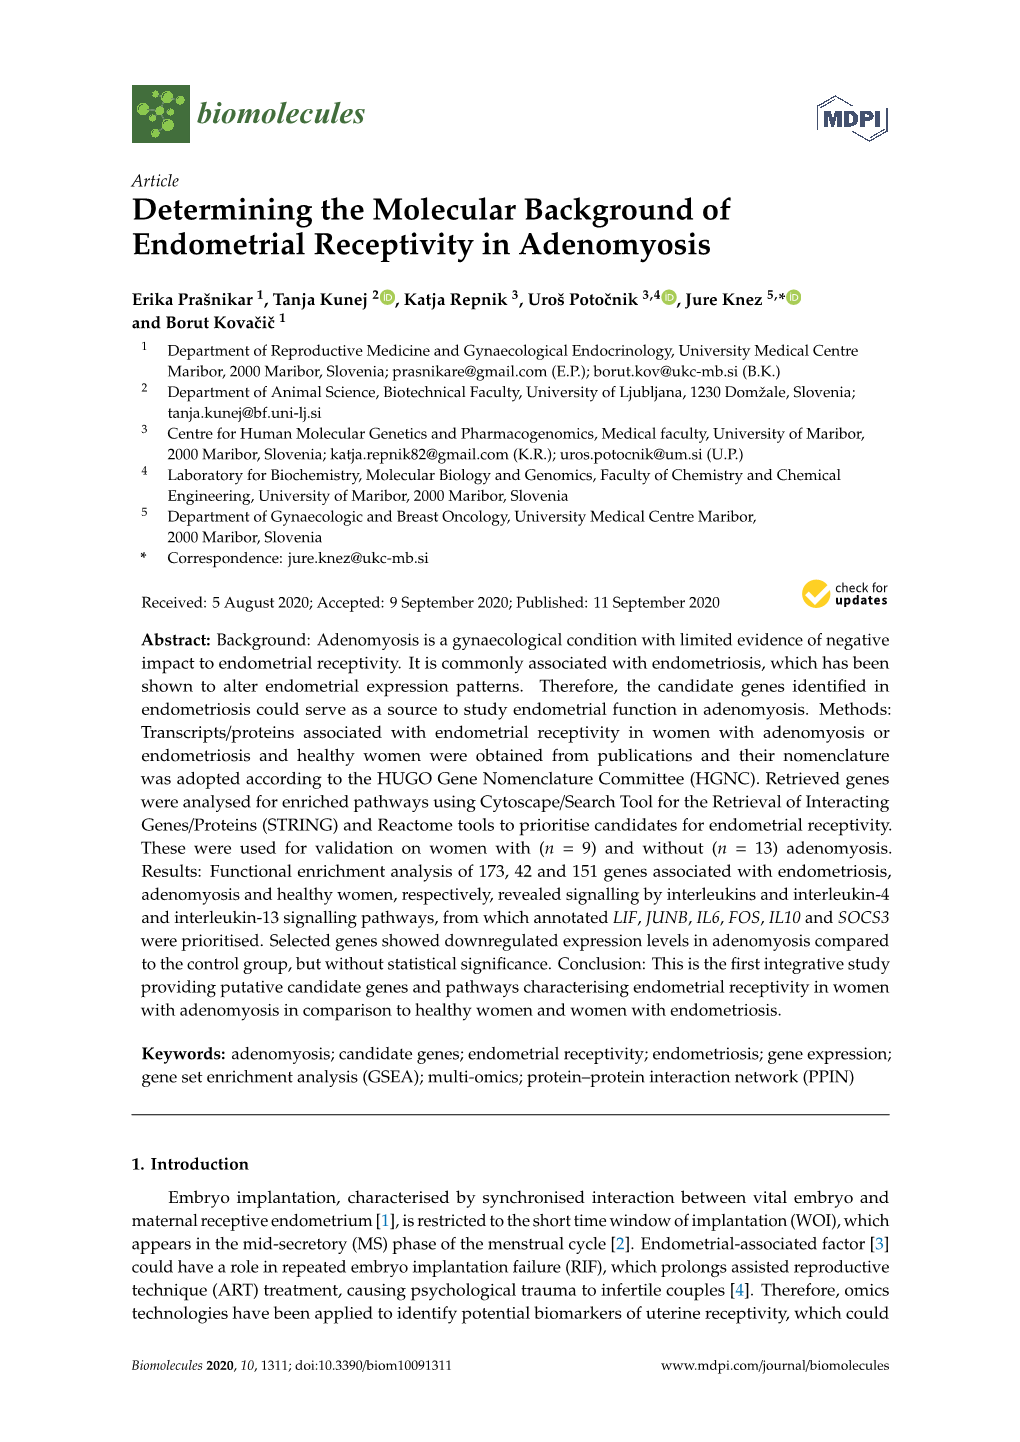 Determining the Molecular Background of Endometrial Receptivity in Adenomyosis